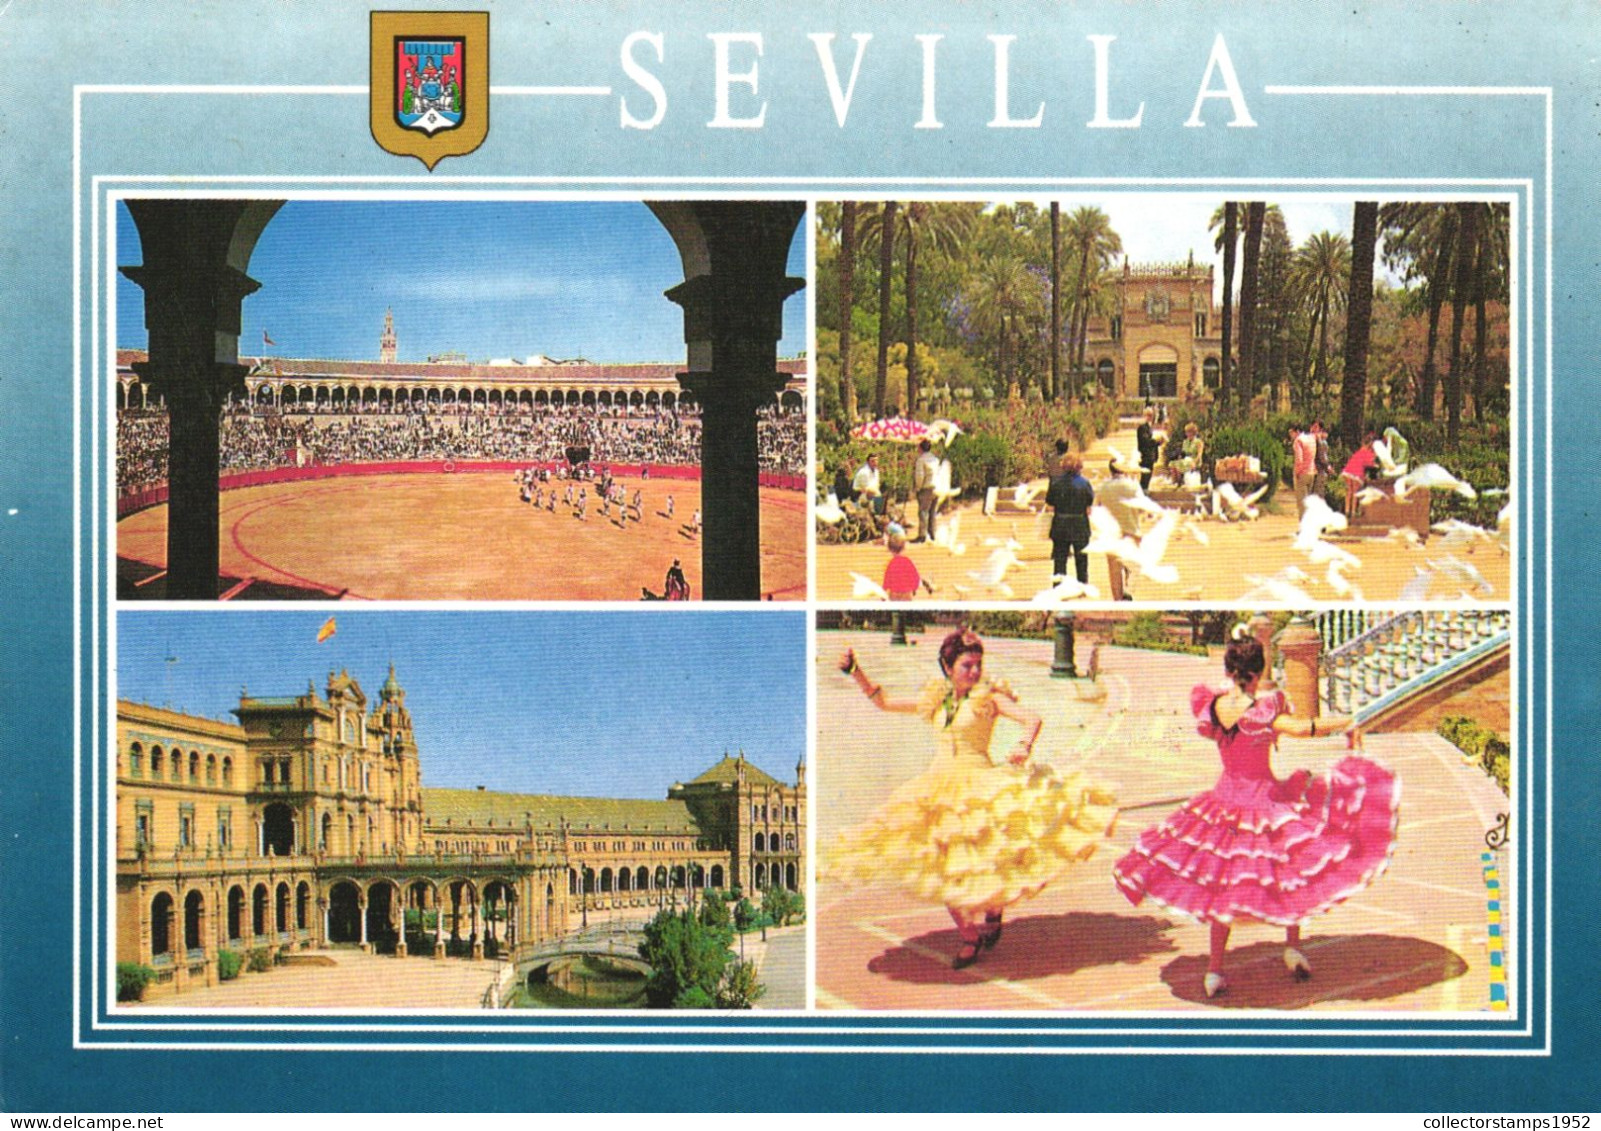 SPAIN, ANDALUCIA, SEVILLA, ARENA, DANCERS, PARK - Sevilla